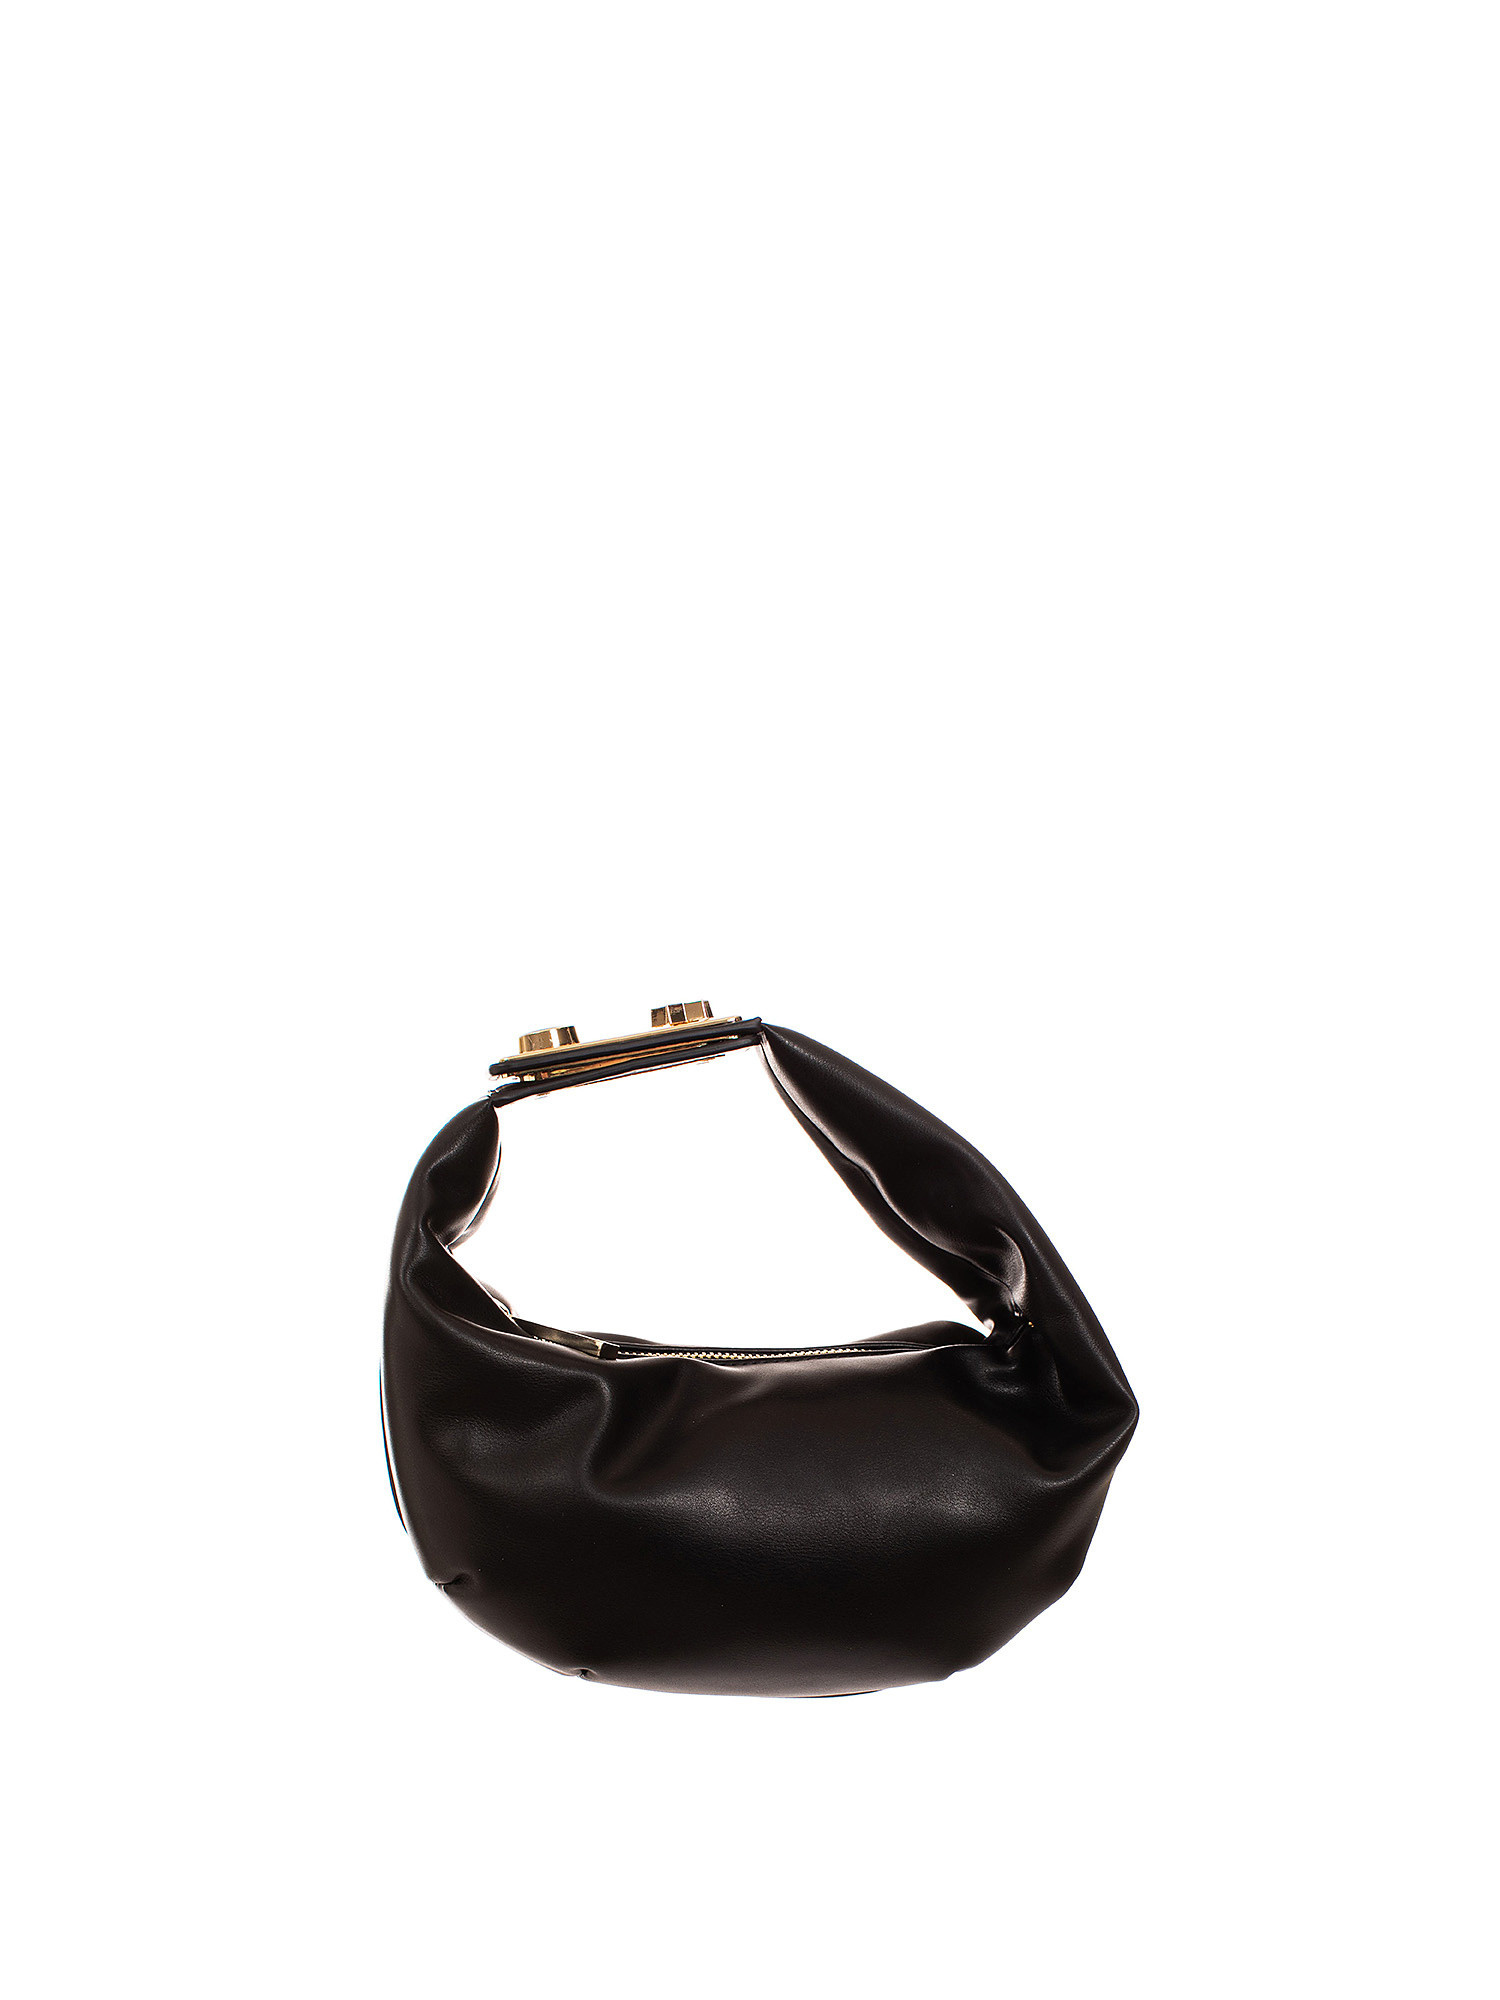 Chiara Ferragni - Range E eye star lock bag, Black, large image number 0